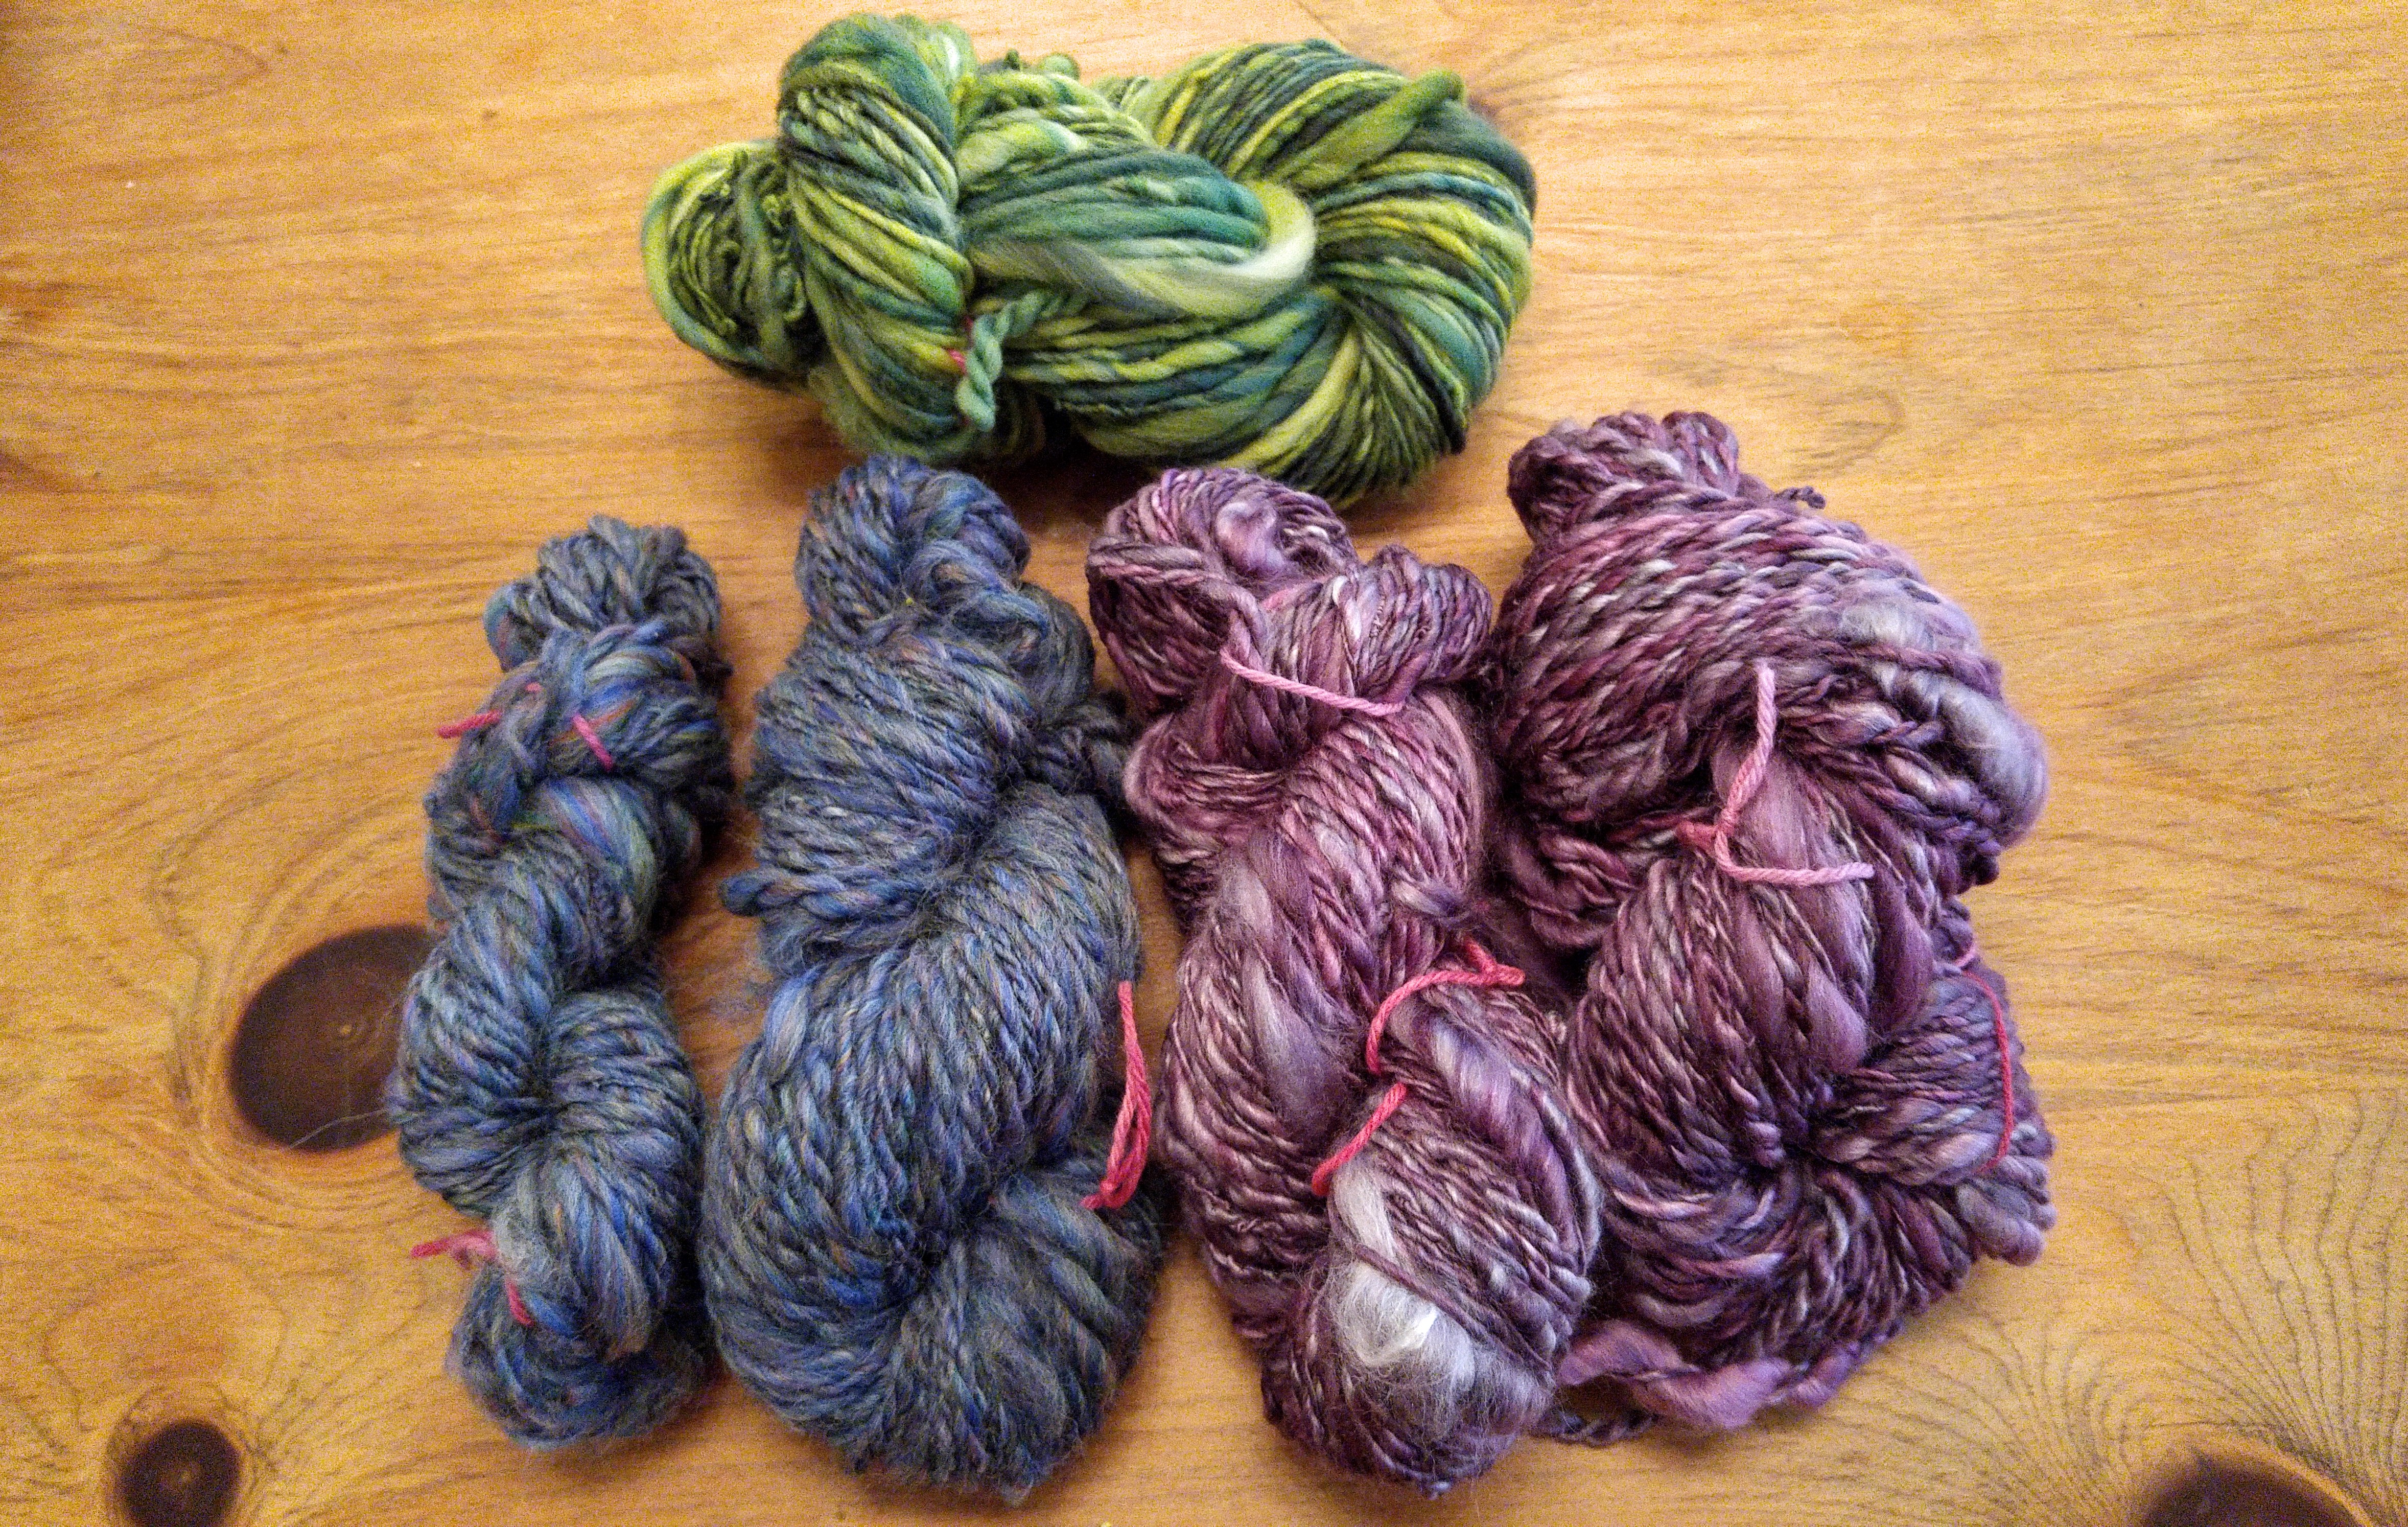 Spinning yarn for Spinzilla 2015